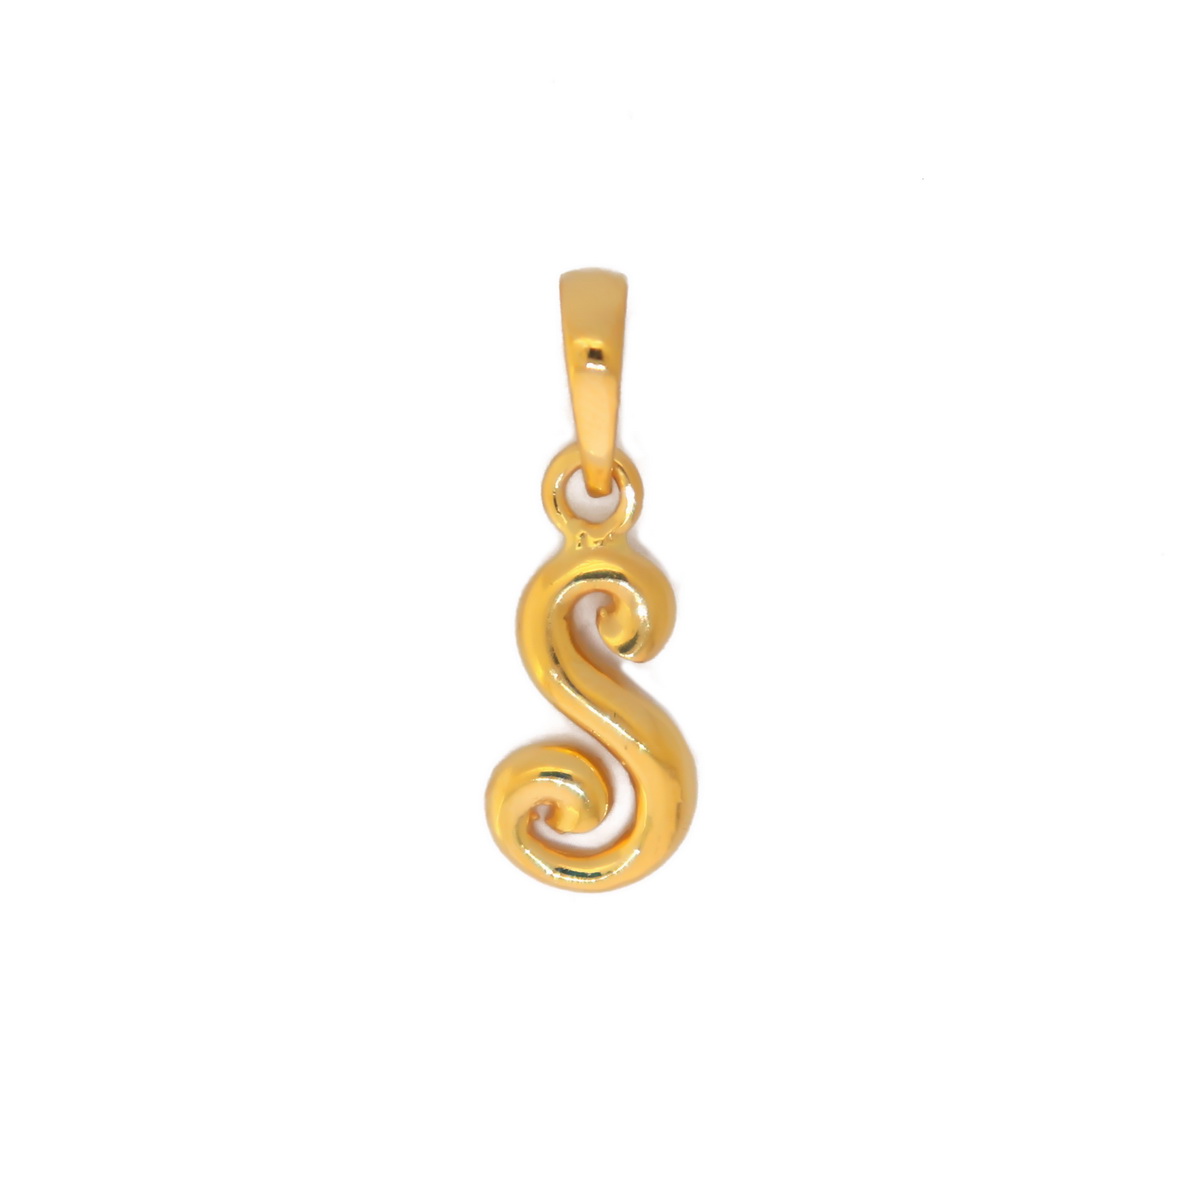 Buy quality 22k yellow gold pendant plain stylish alphabet s in Noida